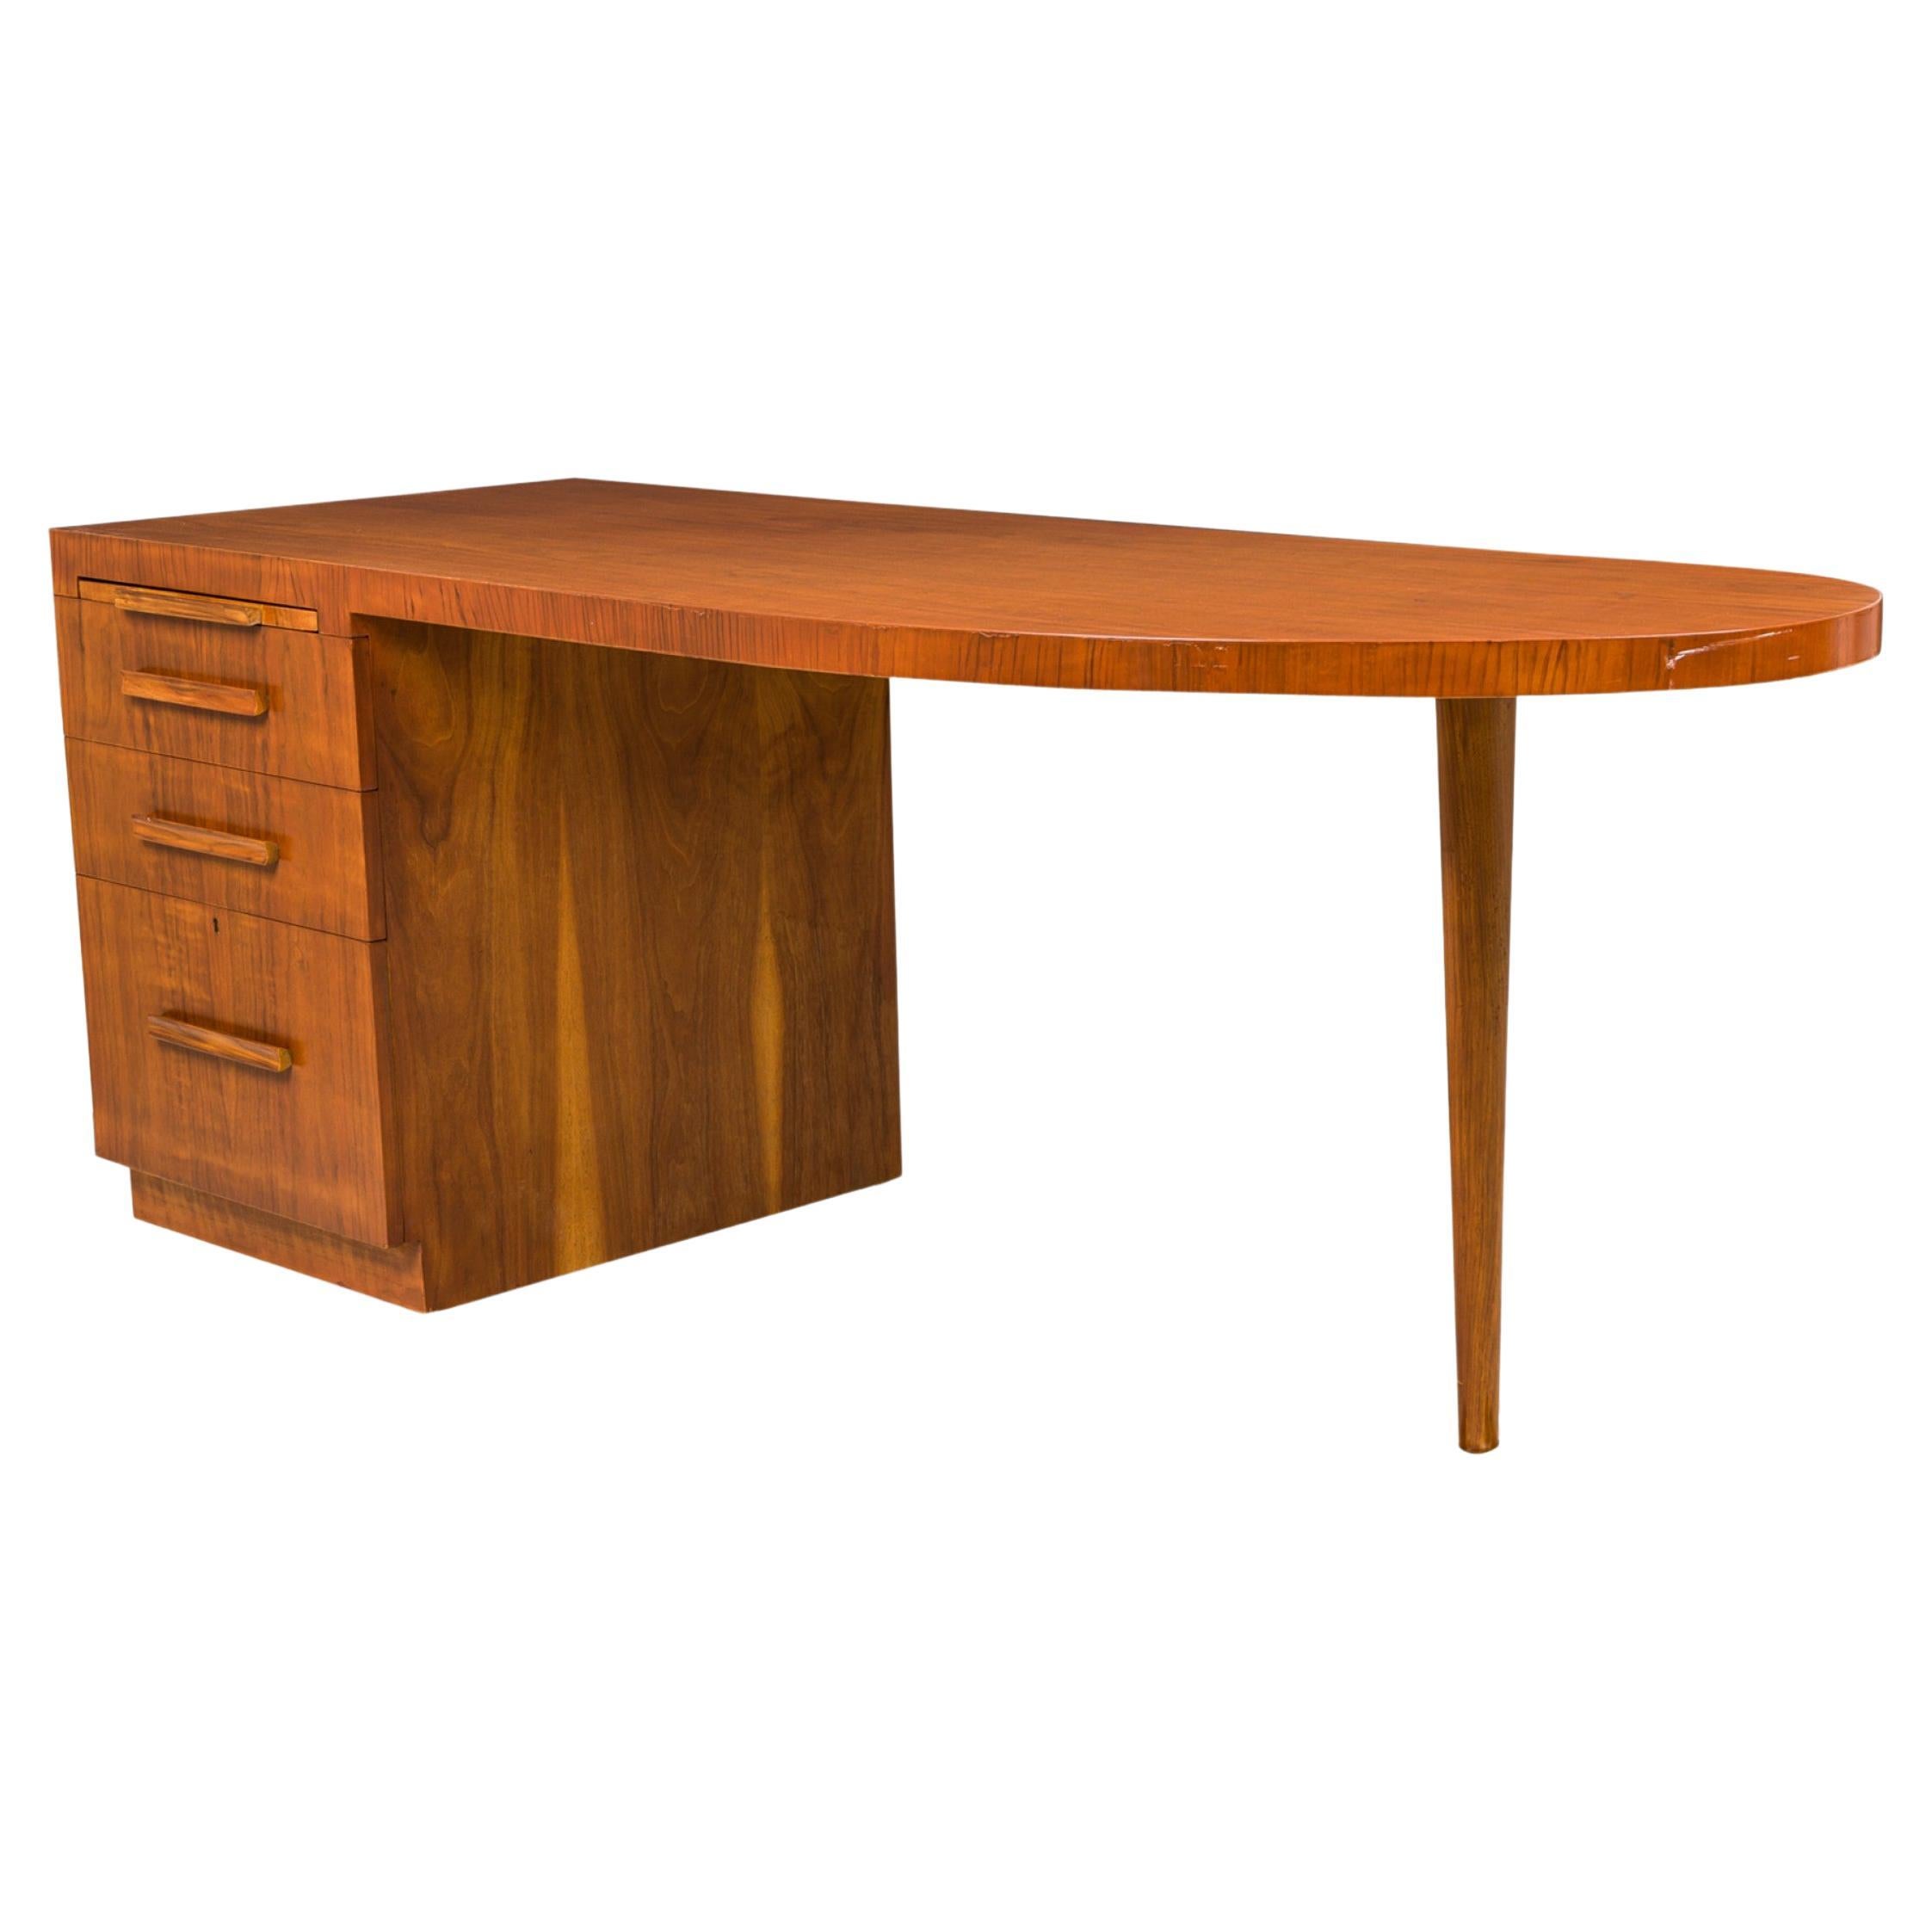 T.H. Robsjohn-Gibbings for Widdicomb Furniture Co. Walnut Semi-Oval Top Desk